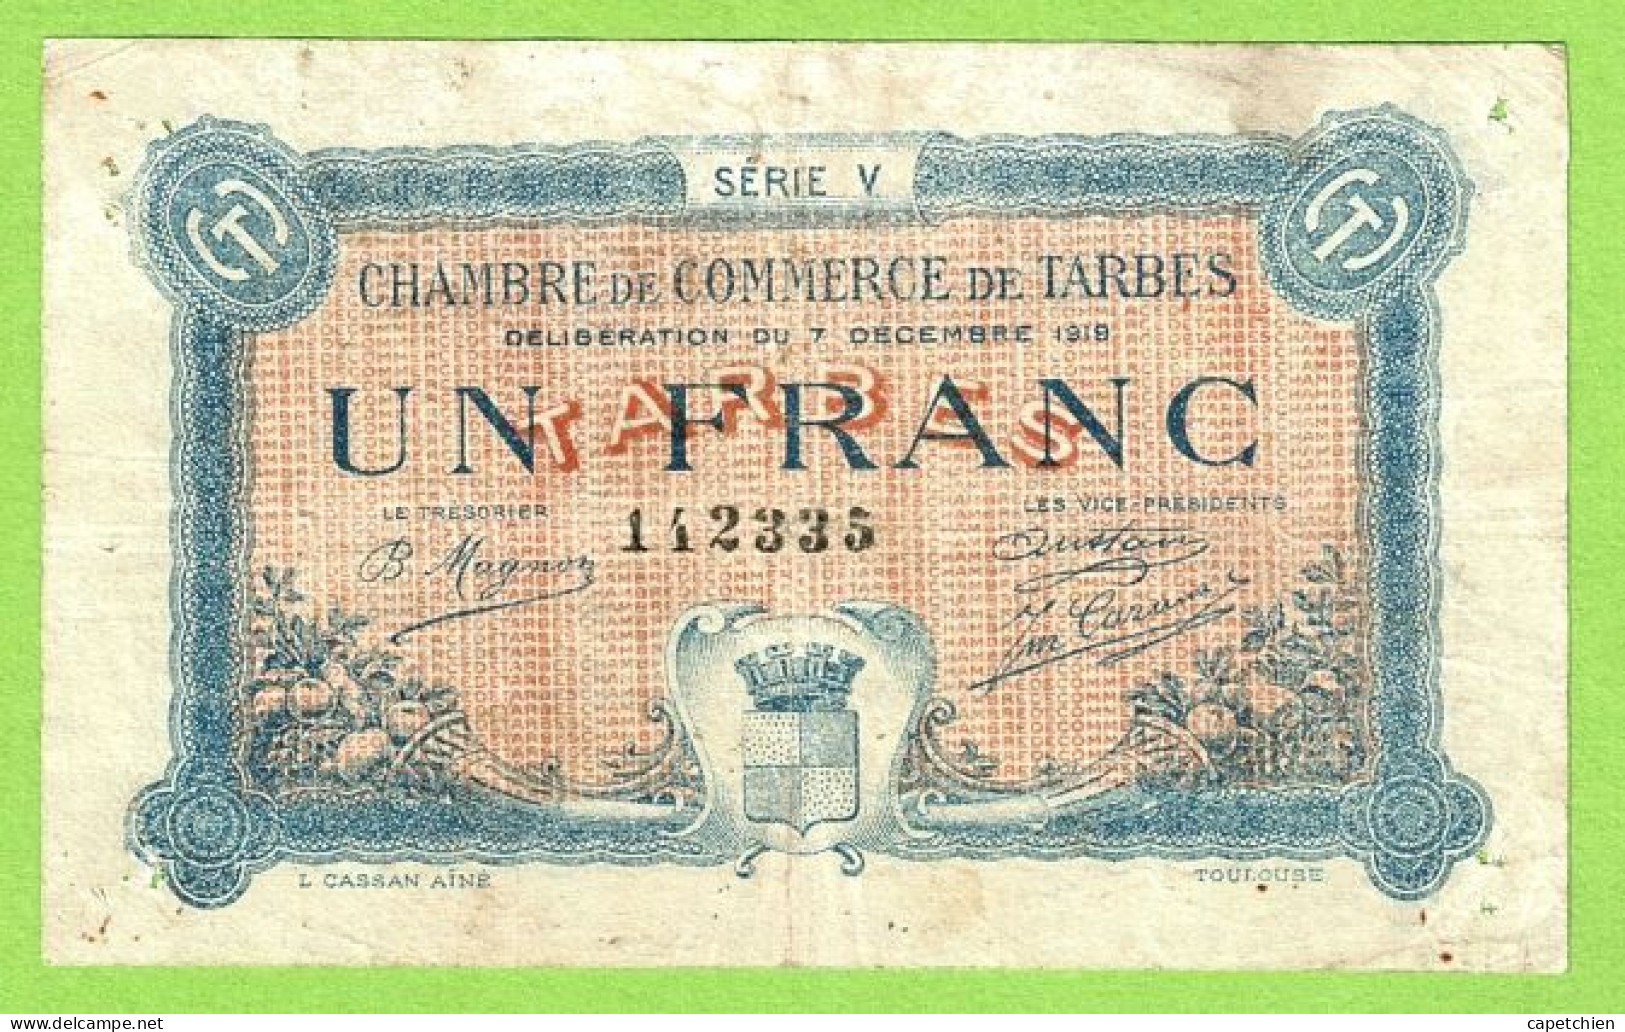 FRANCE / CHAMBRE De COMMERCE / TARBES / 1 FRANC / 7 DECEMBRE 1918 / 142335 / SERIE V - Chambre De Commerce